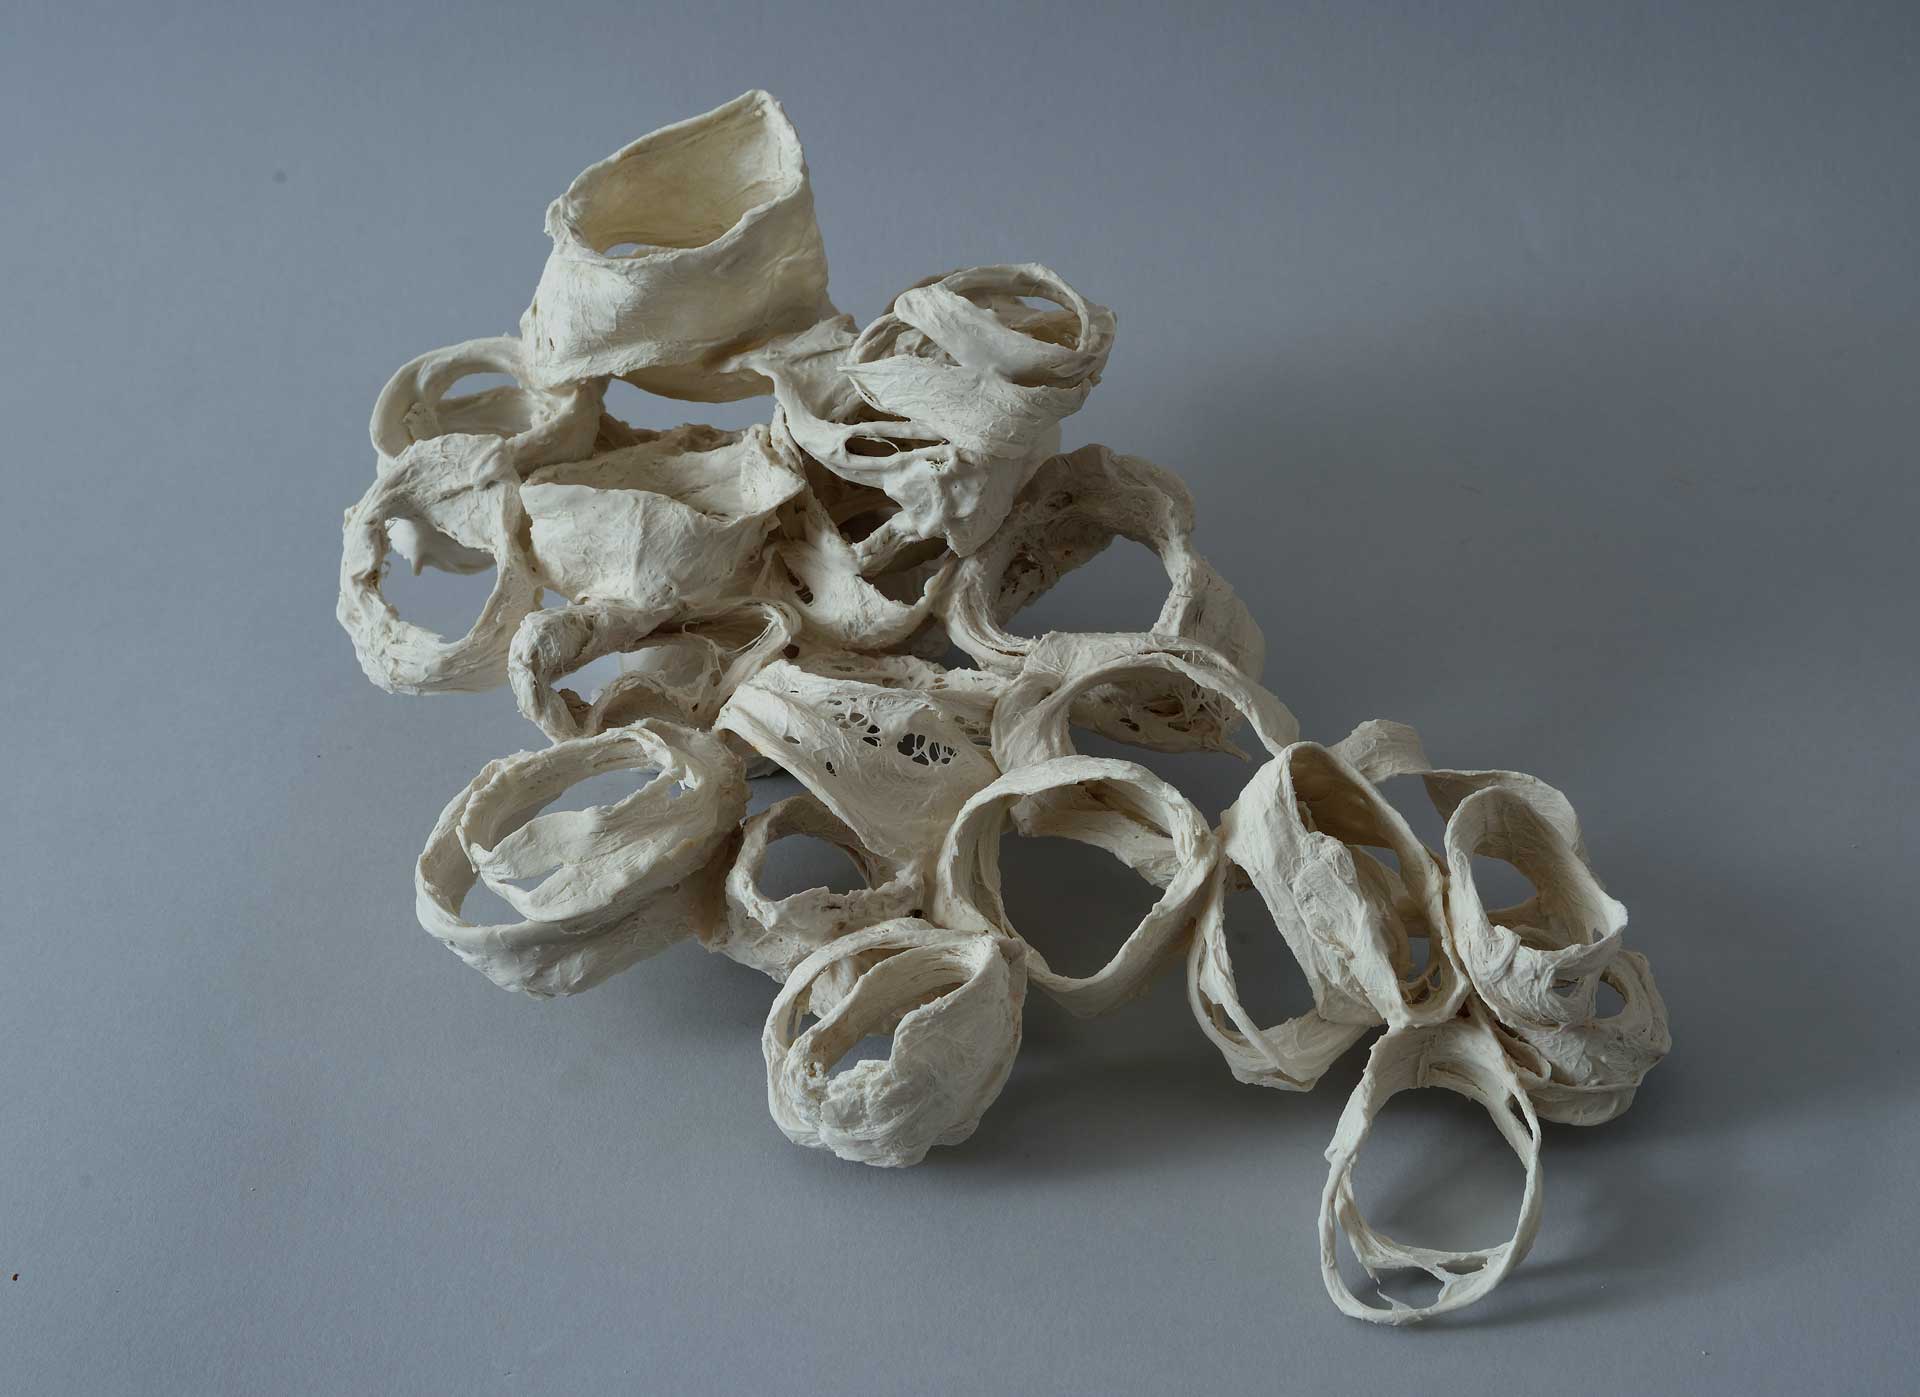 traces - vegetal fibers, porcelain - 2012